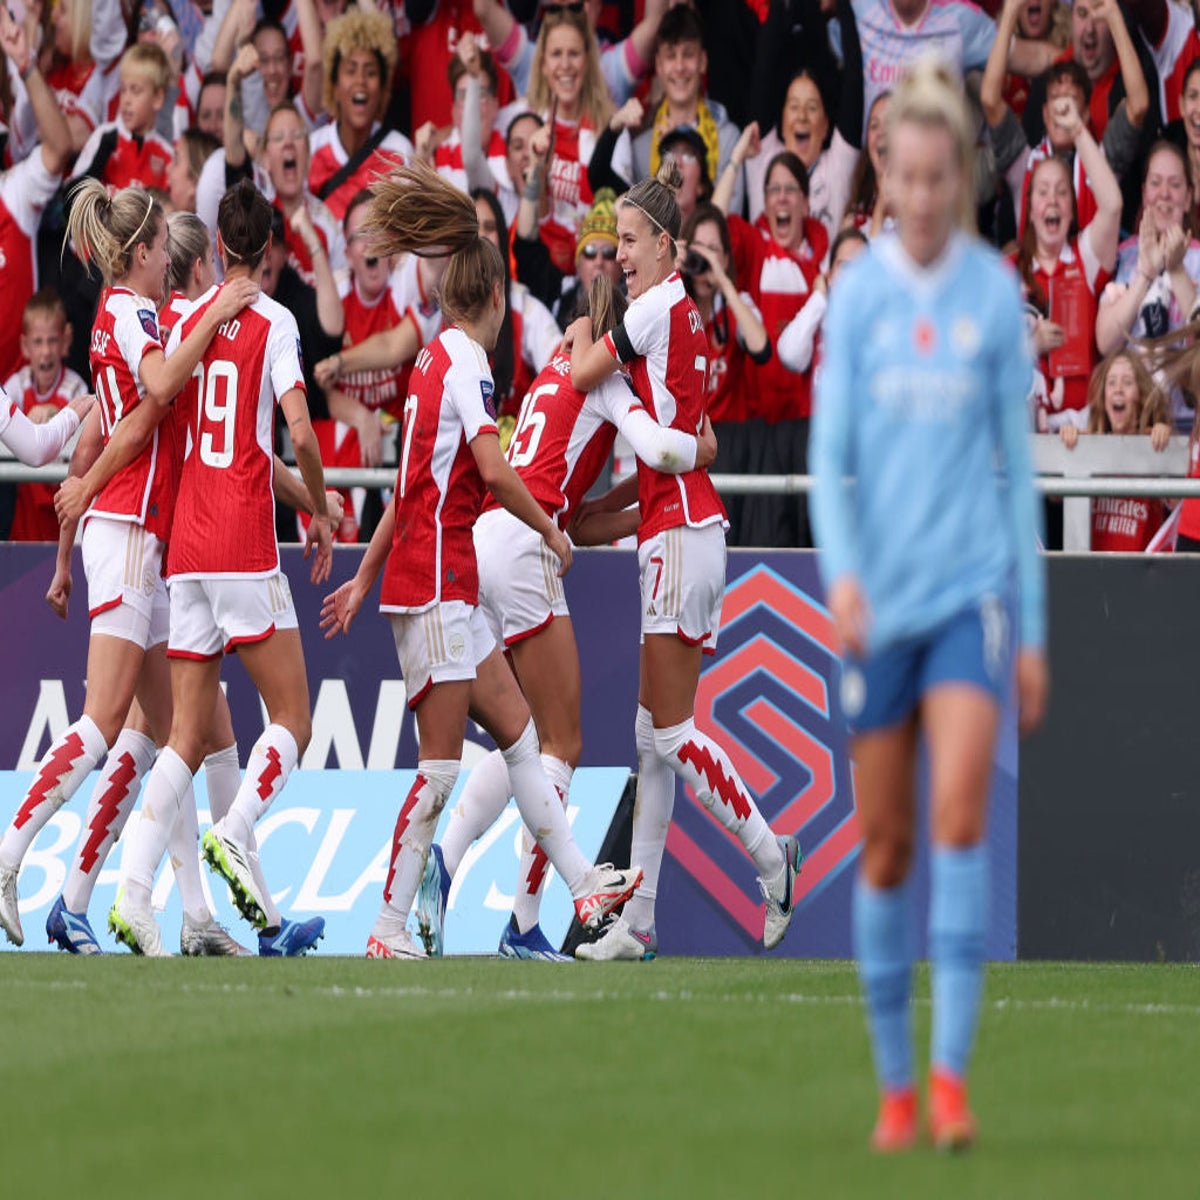 Bristol City Women 1-2 Arsenal Women: McCabe scores twice